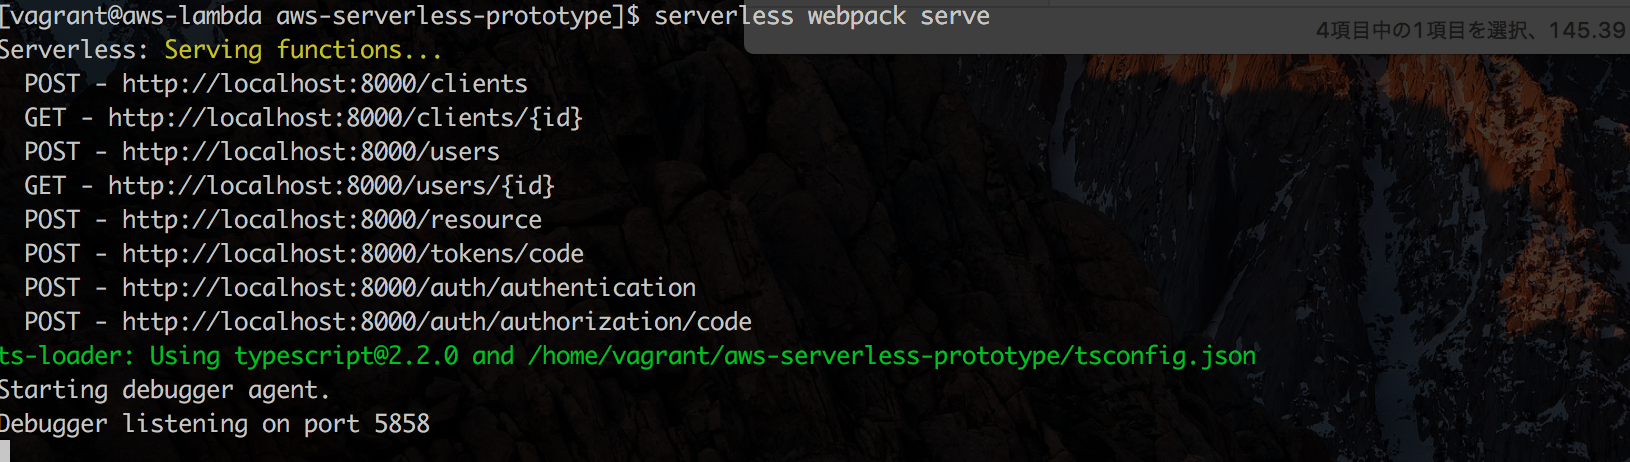 serverless_webpack_serve2.png